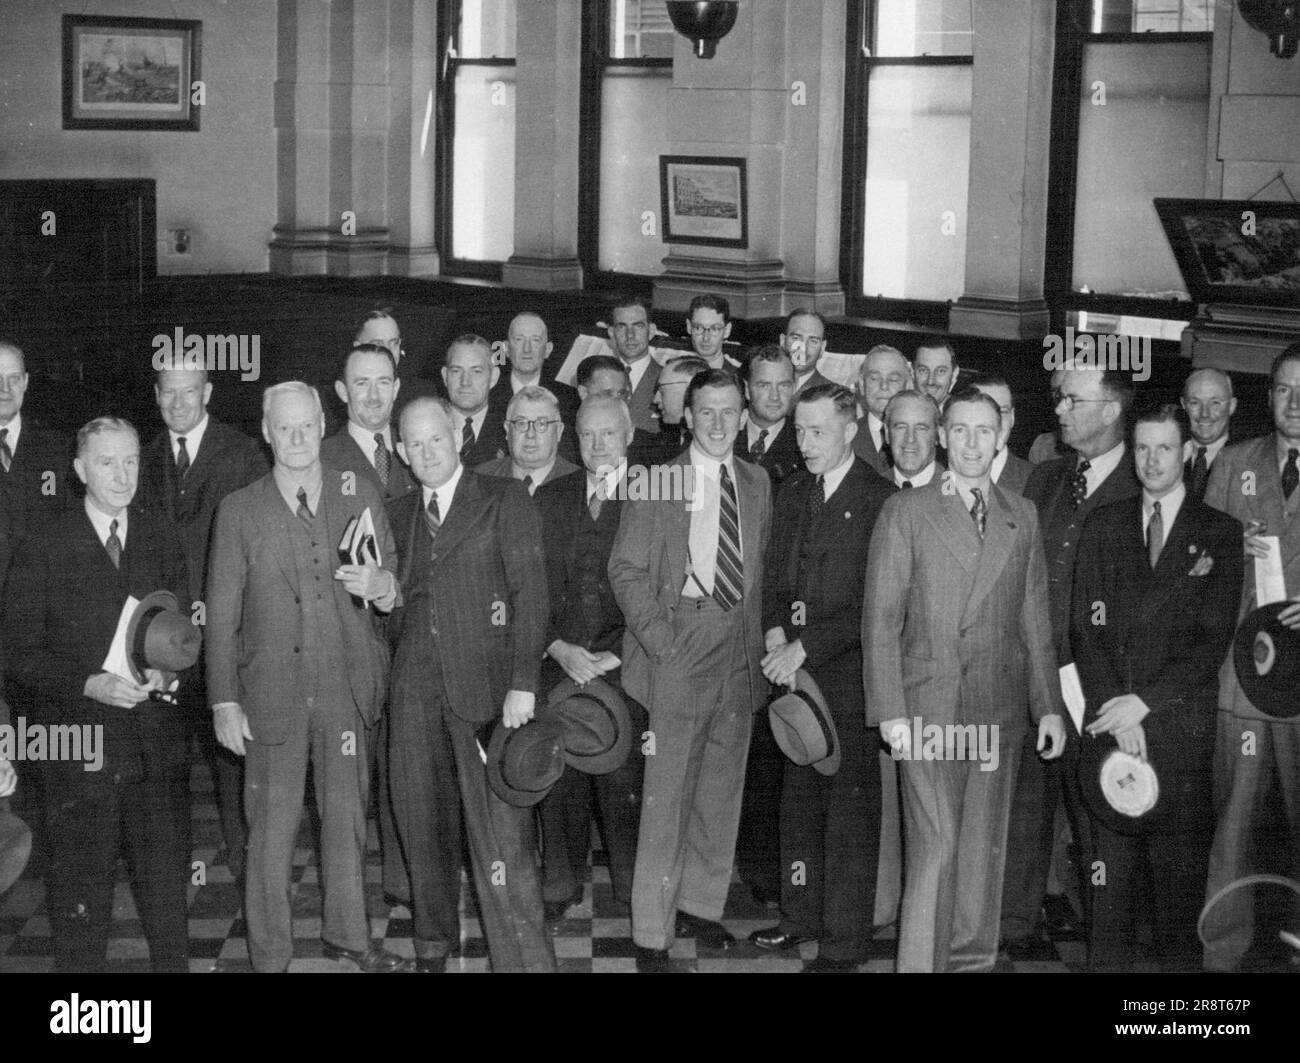 F. E. Tilley, Chm. Sydney Stock Exchange, R. V. Spier, H. Steele, A. W. Harvey, R. Rowe (Deg'hdt), C. Brownhill, S. Green (Cran), G Gunton (B'hill), W. J. Tilley, A. D. Mears, J. Mason Niel. December 1, 1947. Stock Photo